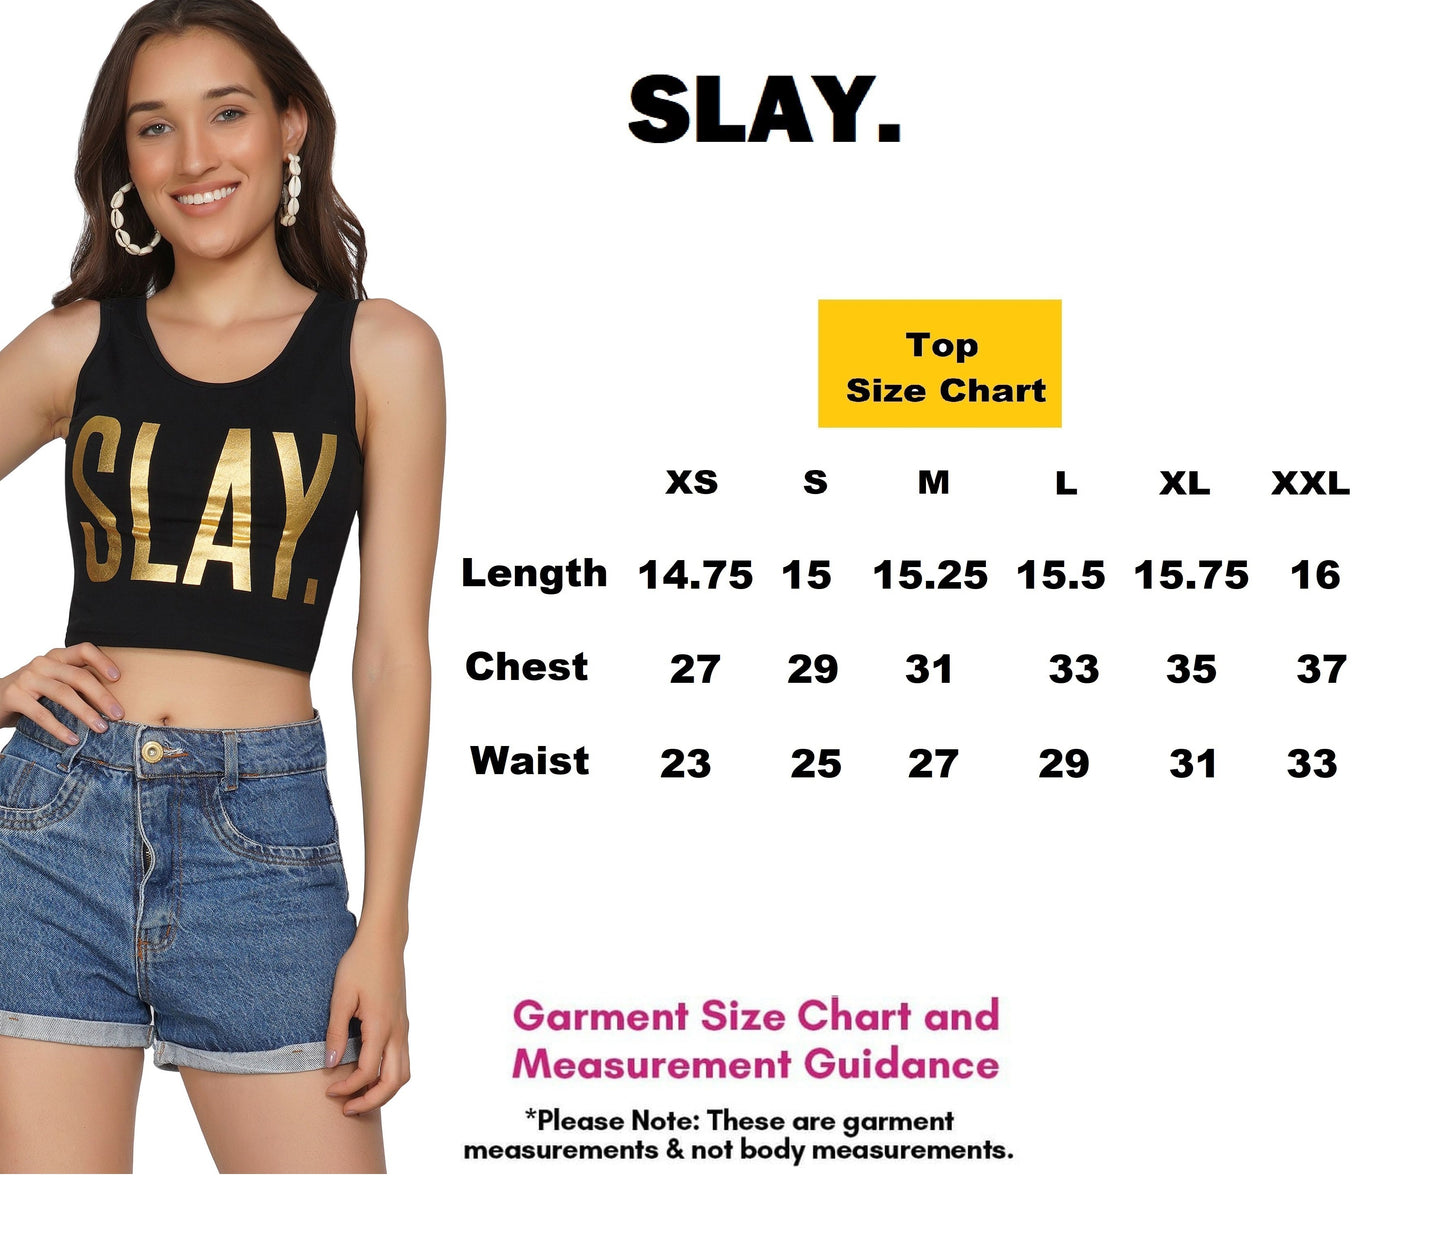 SLAY. Women's Limited Edition Gold Foil Print Matt Finish Crop Top-clothing-to-slay.myshopify.com-Crop Top